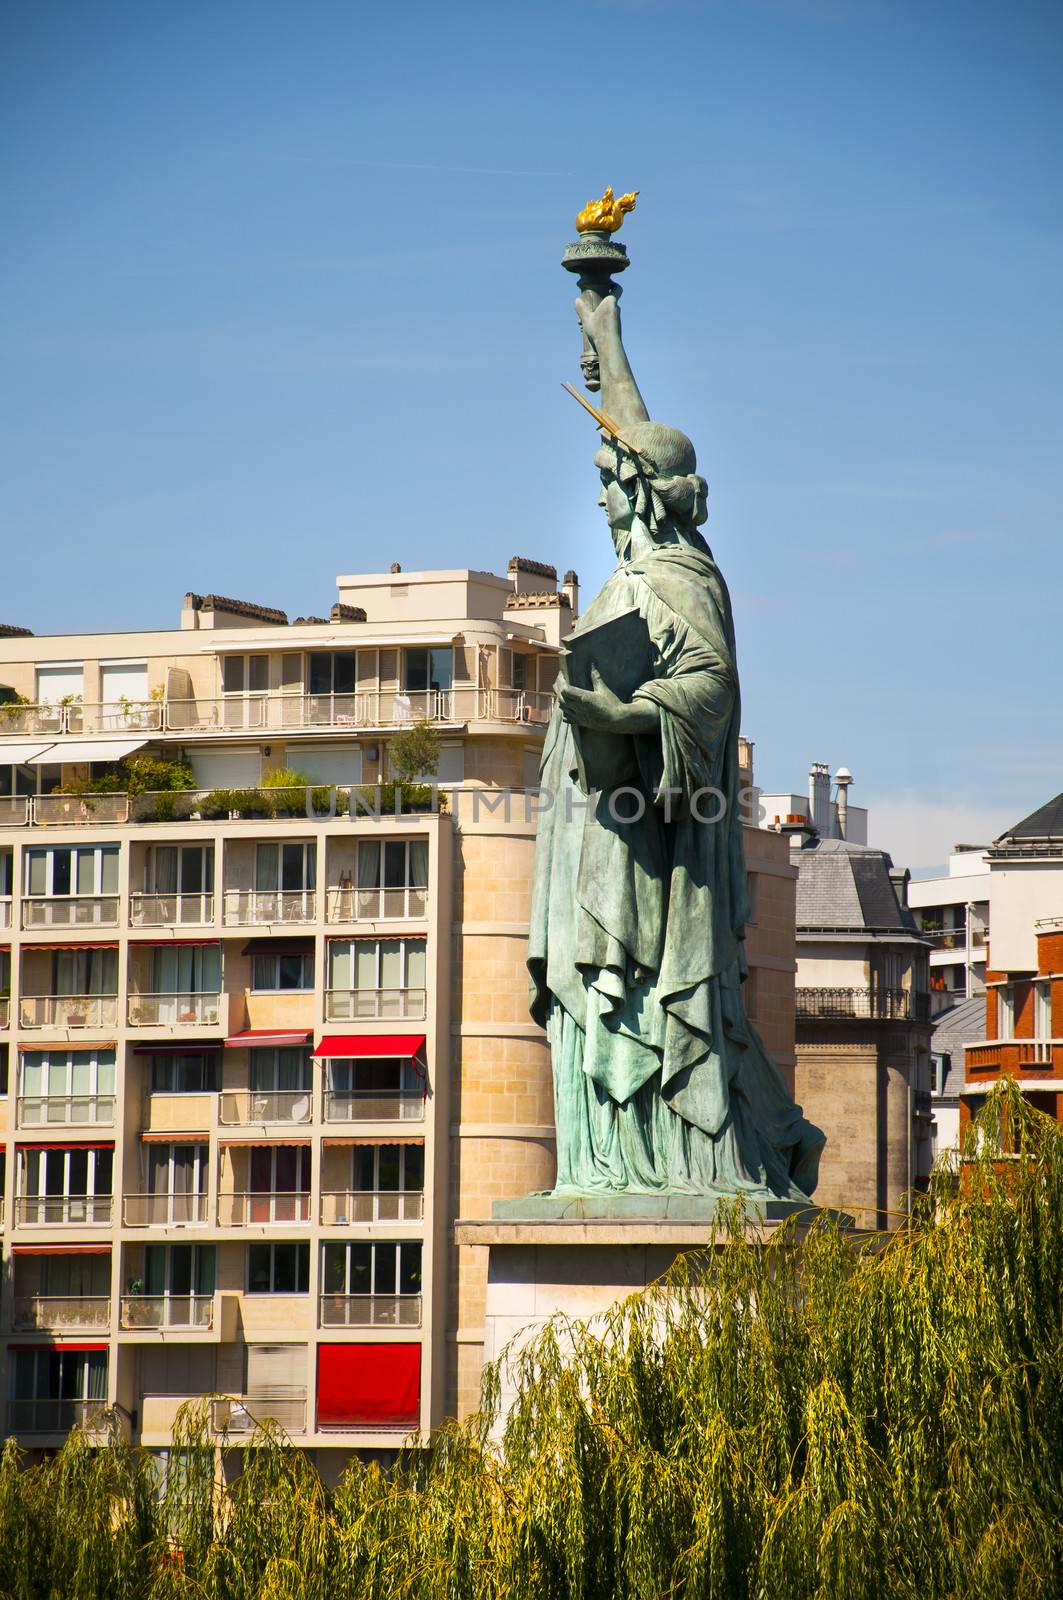 Statue of Liberty in Paris on Allée des Cygnes